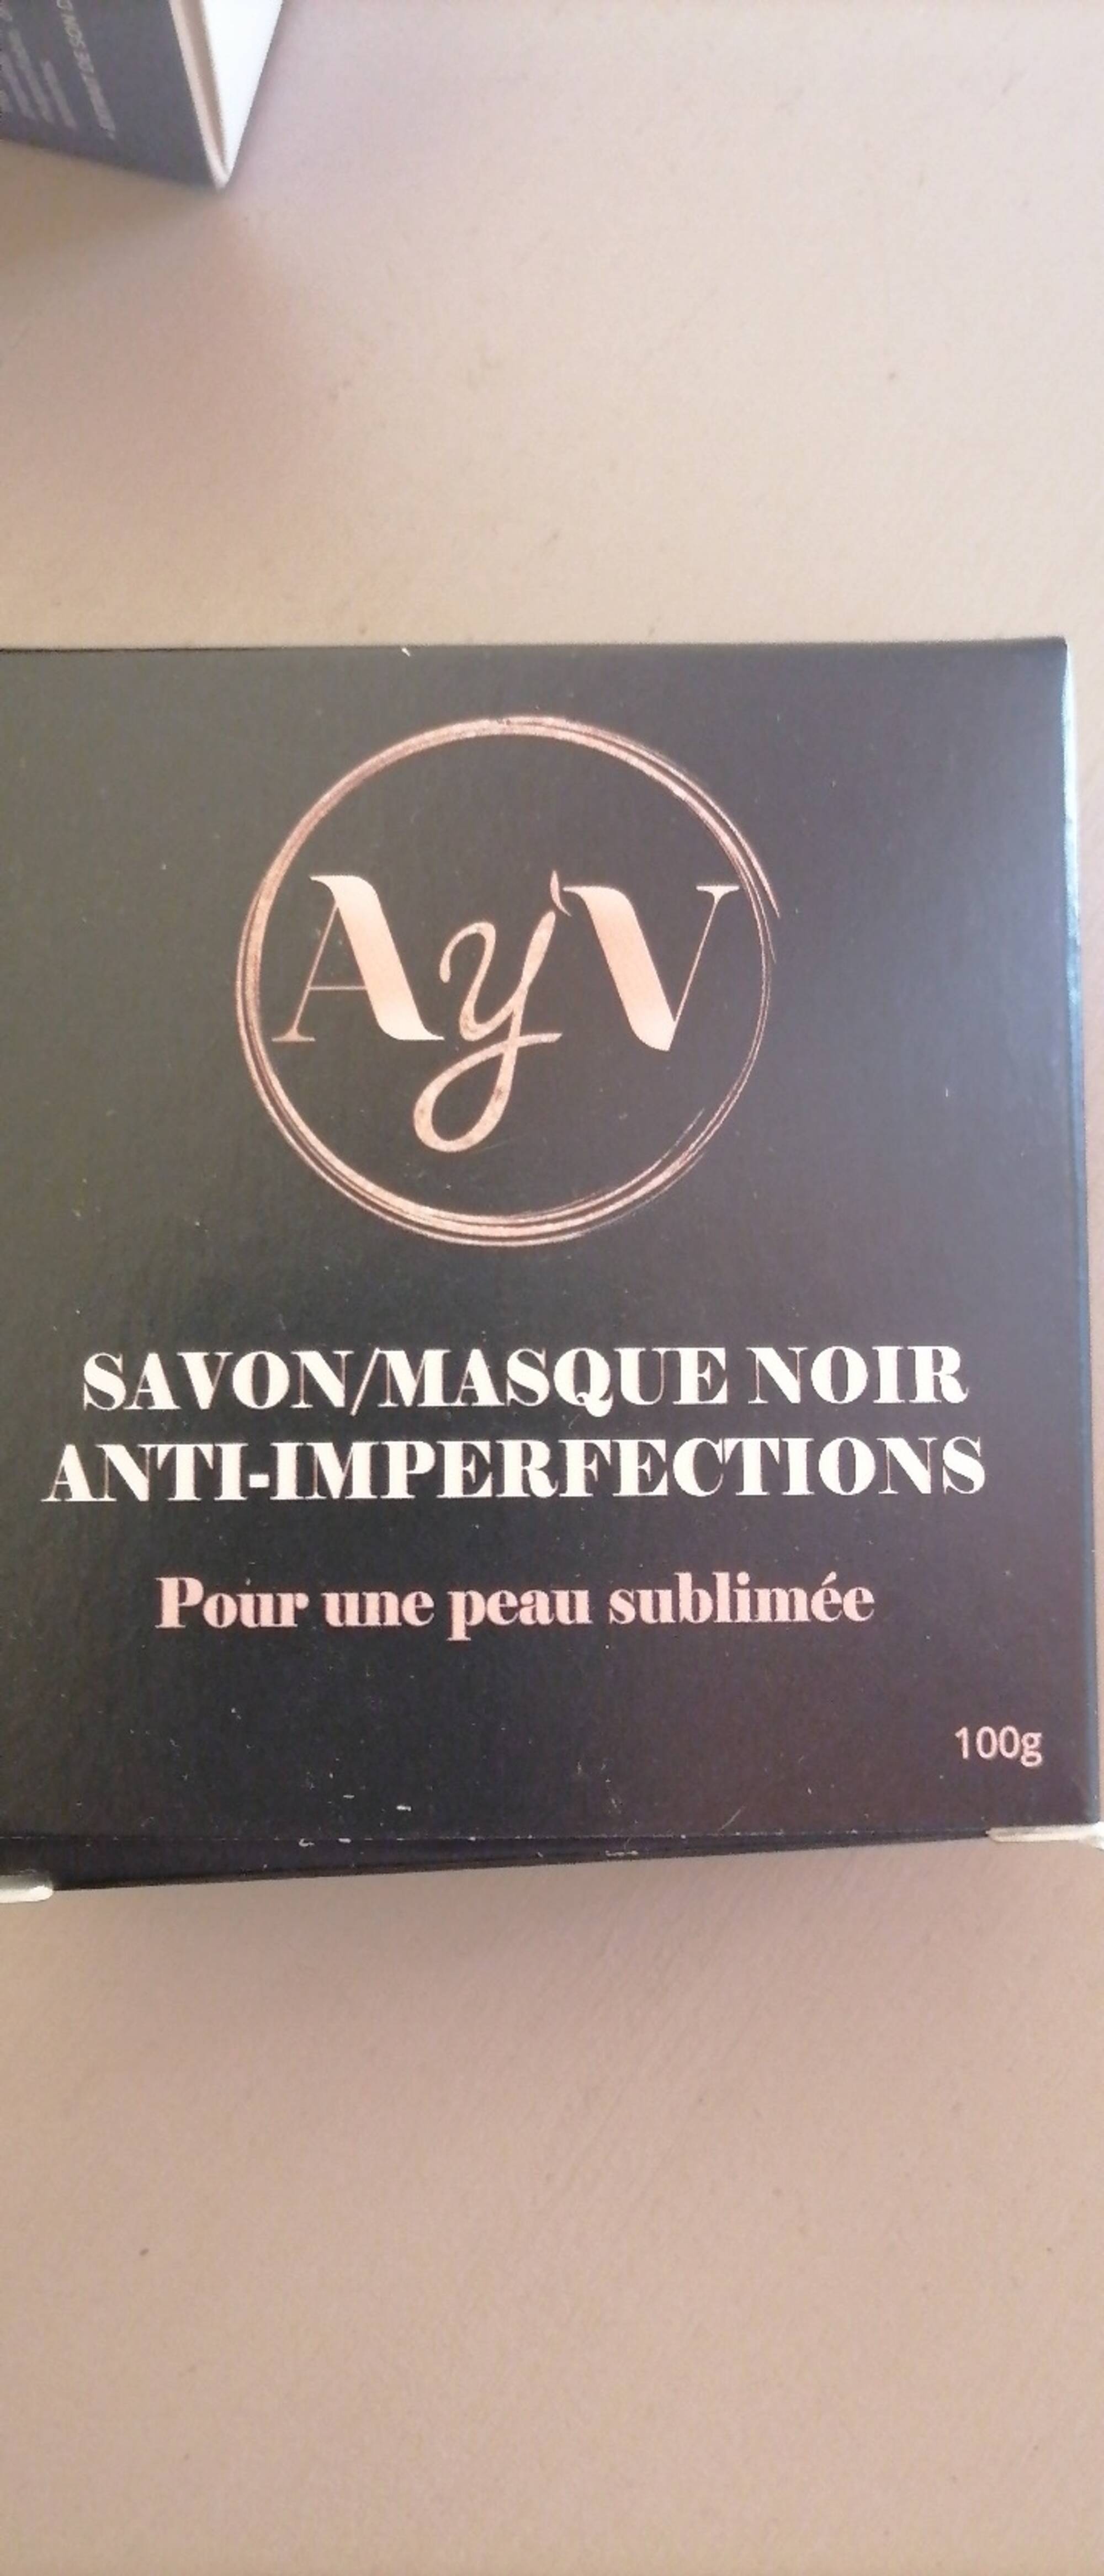 AY'V - Savon/masque noir - anti-imperfections